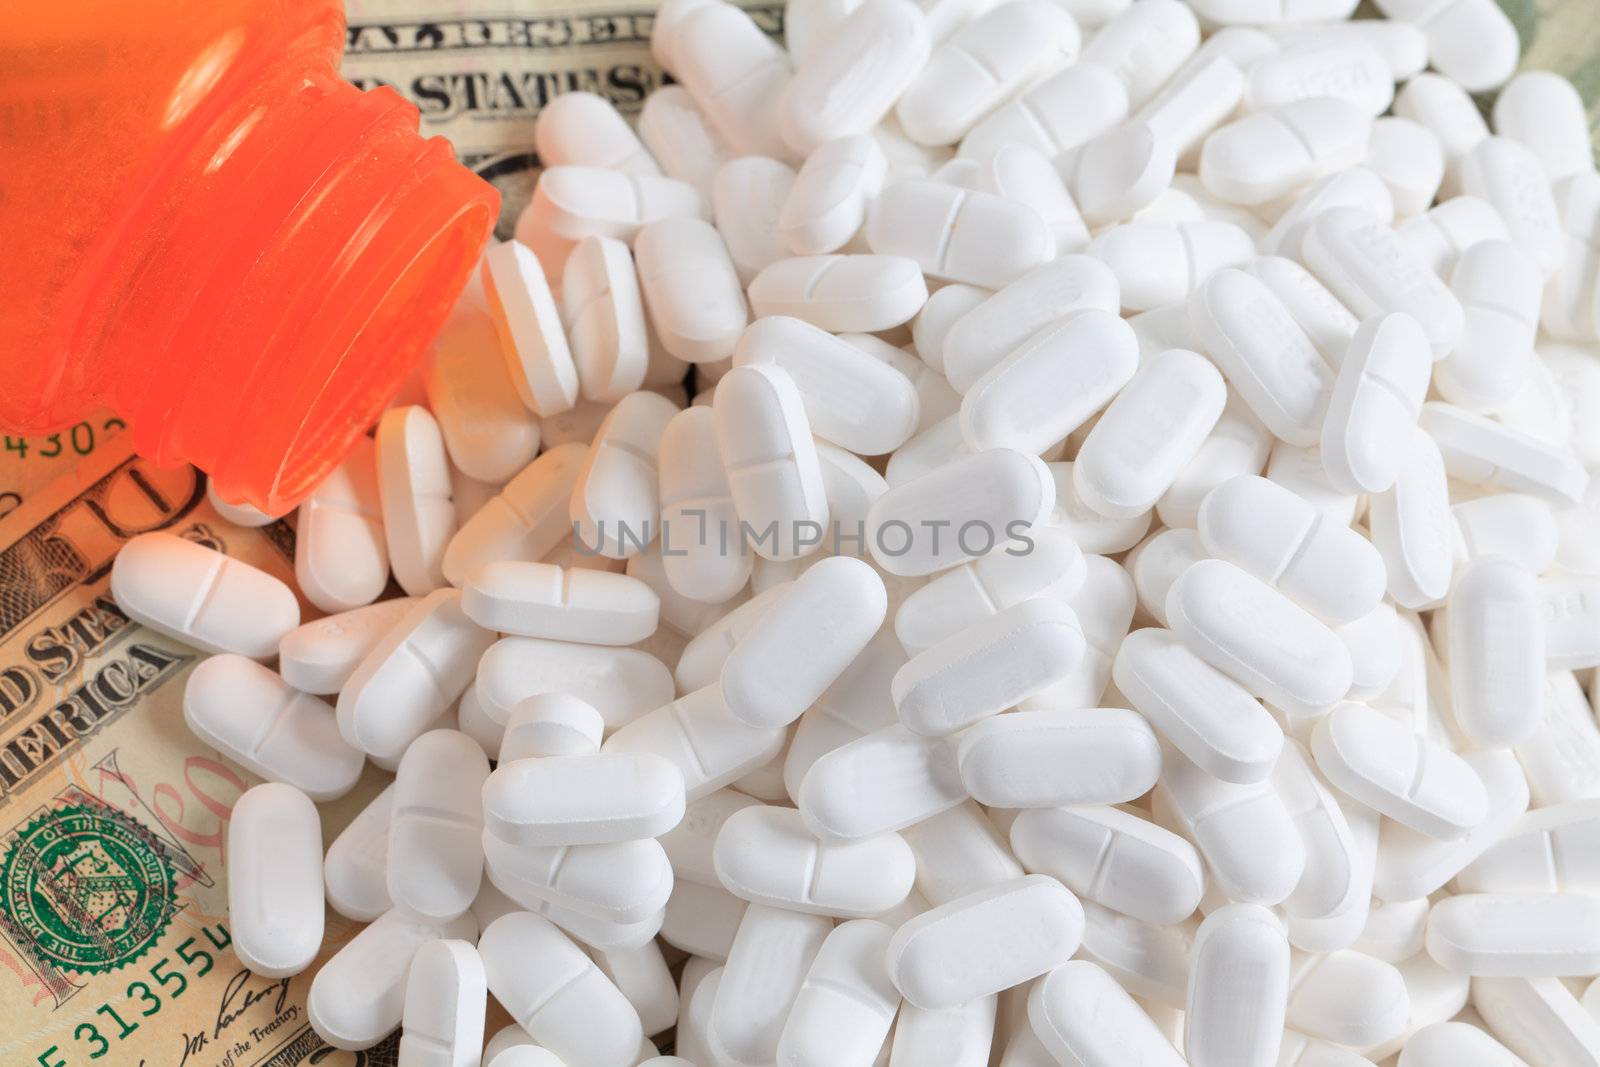 Prescription Drugs narcotics by Orchidflower